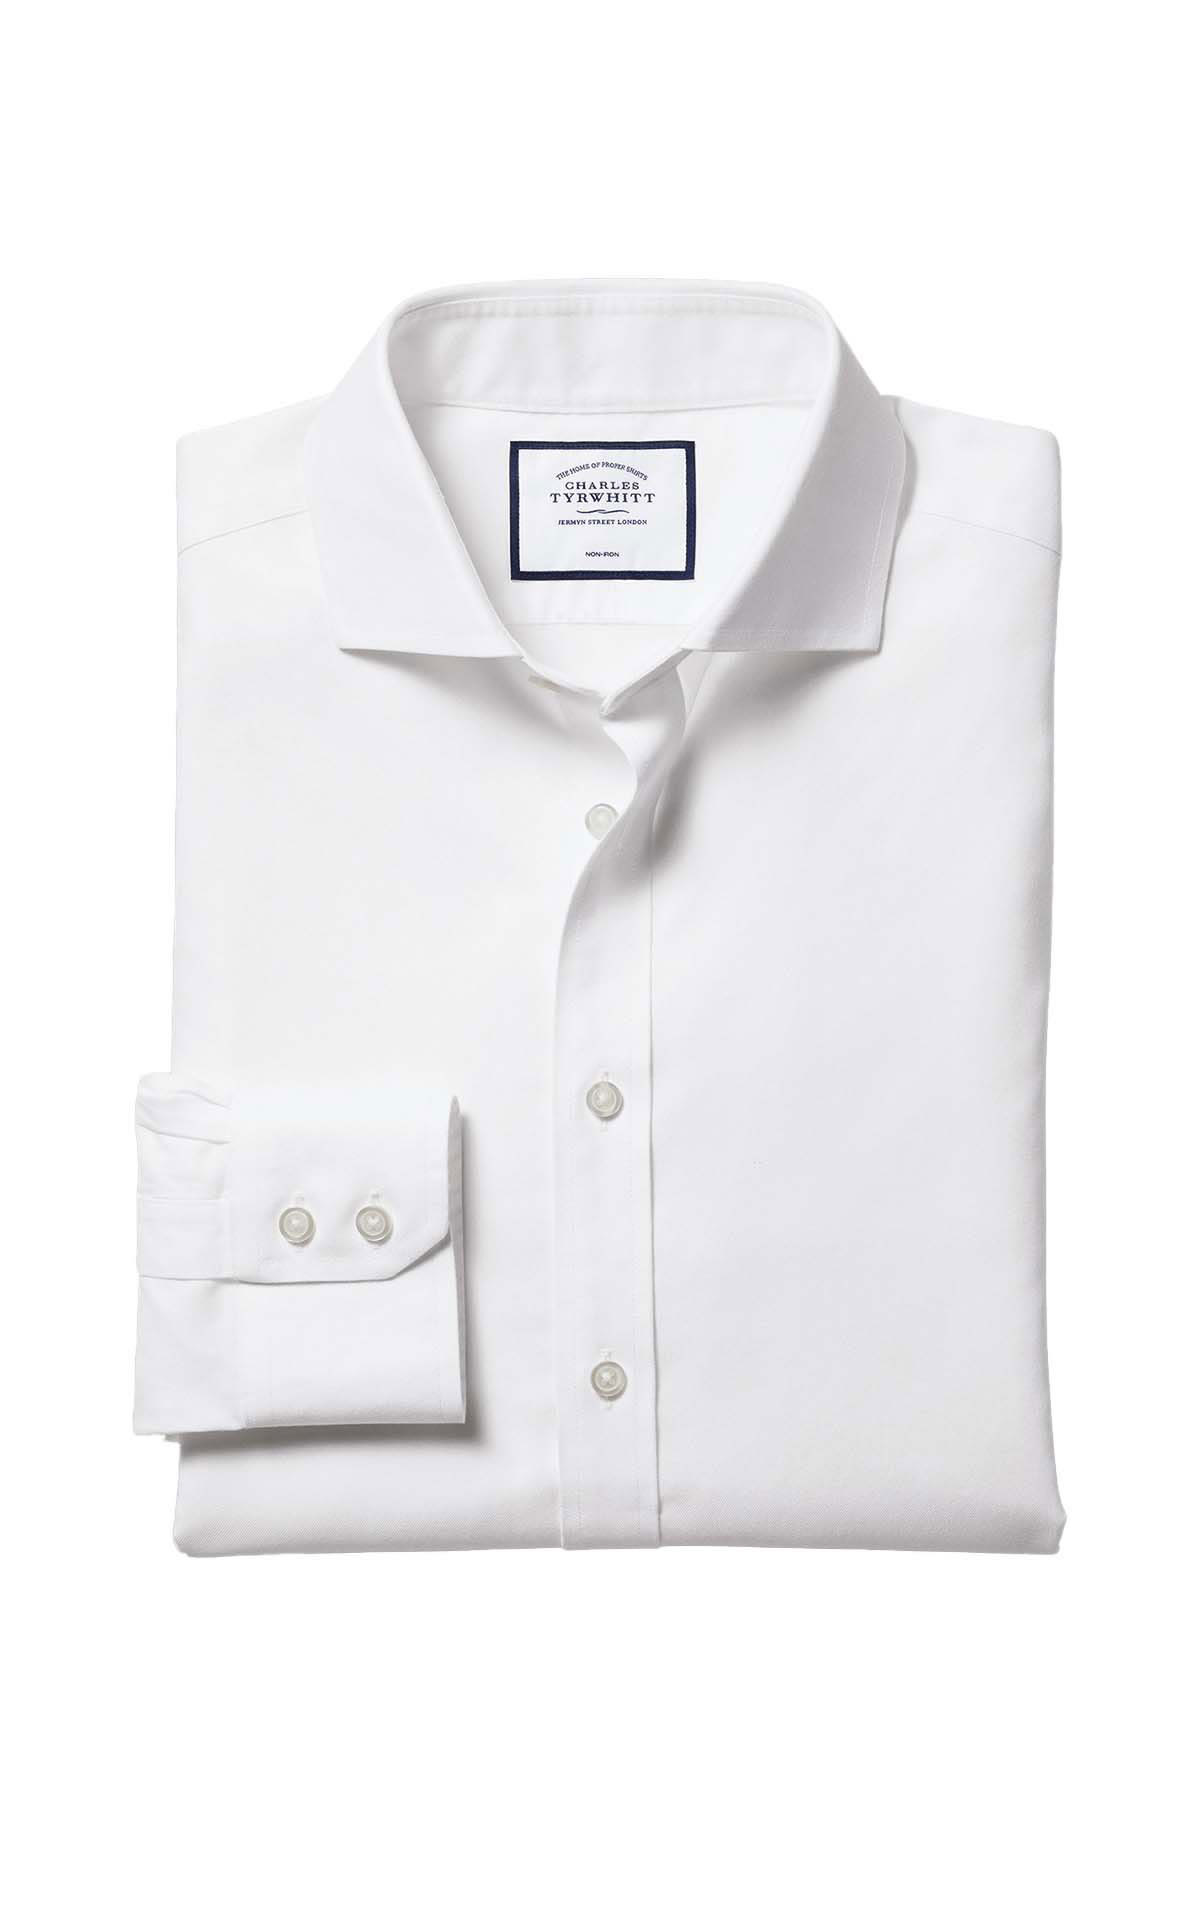 Charles Tyrwhitt White non-iron twill shirt from Bicester Village